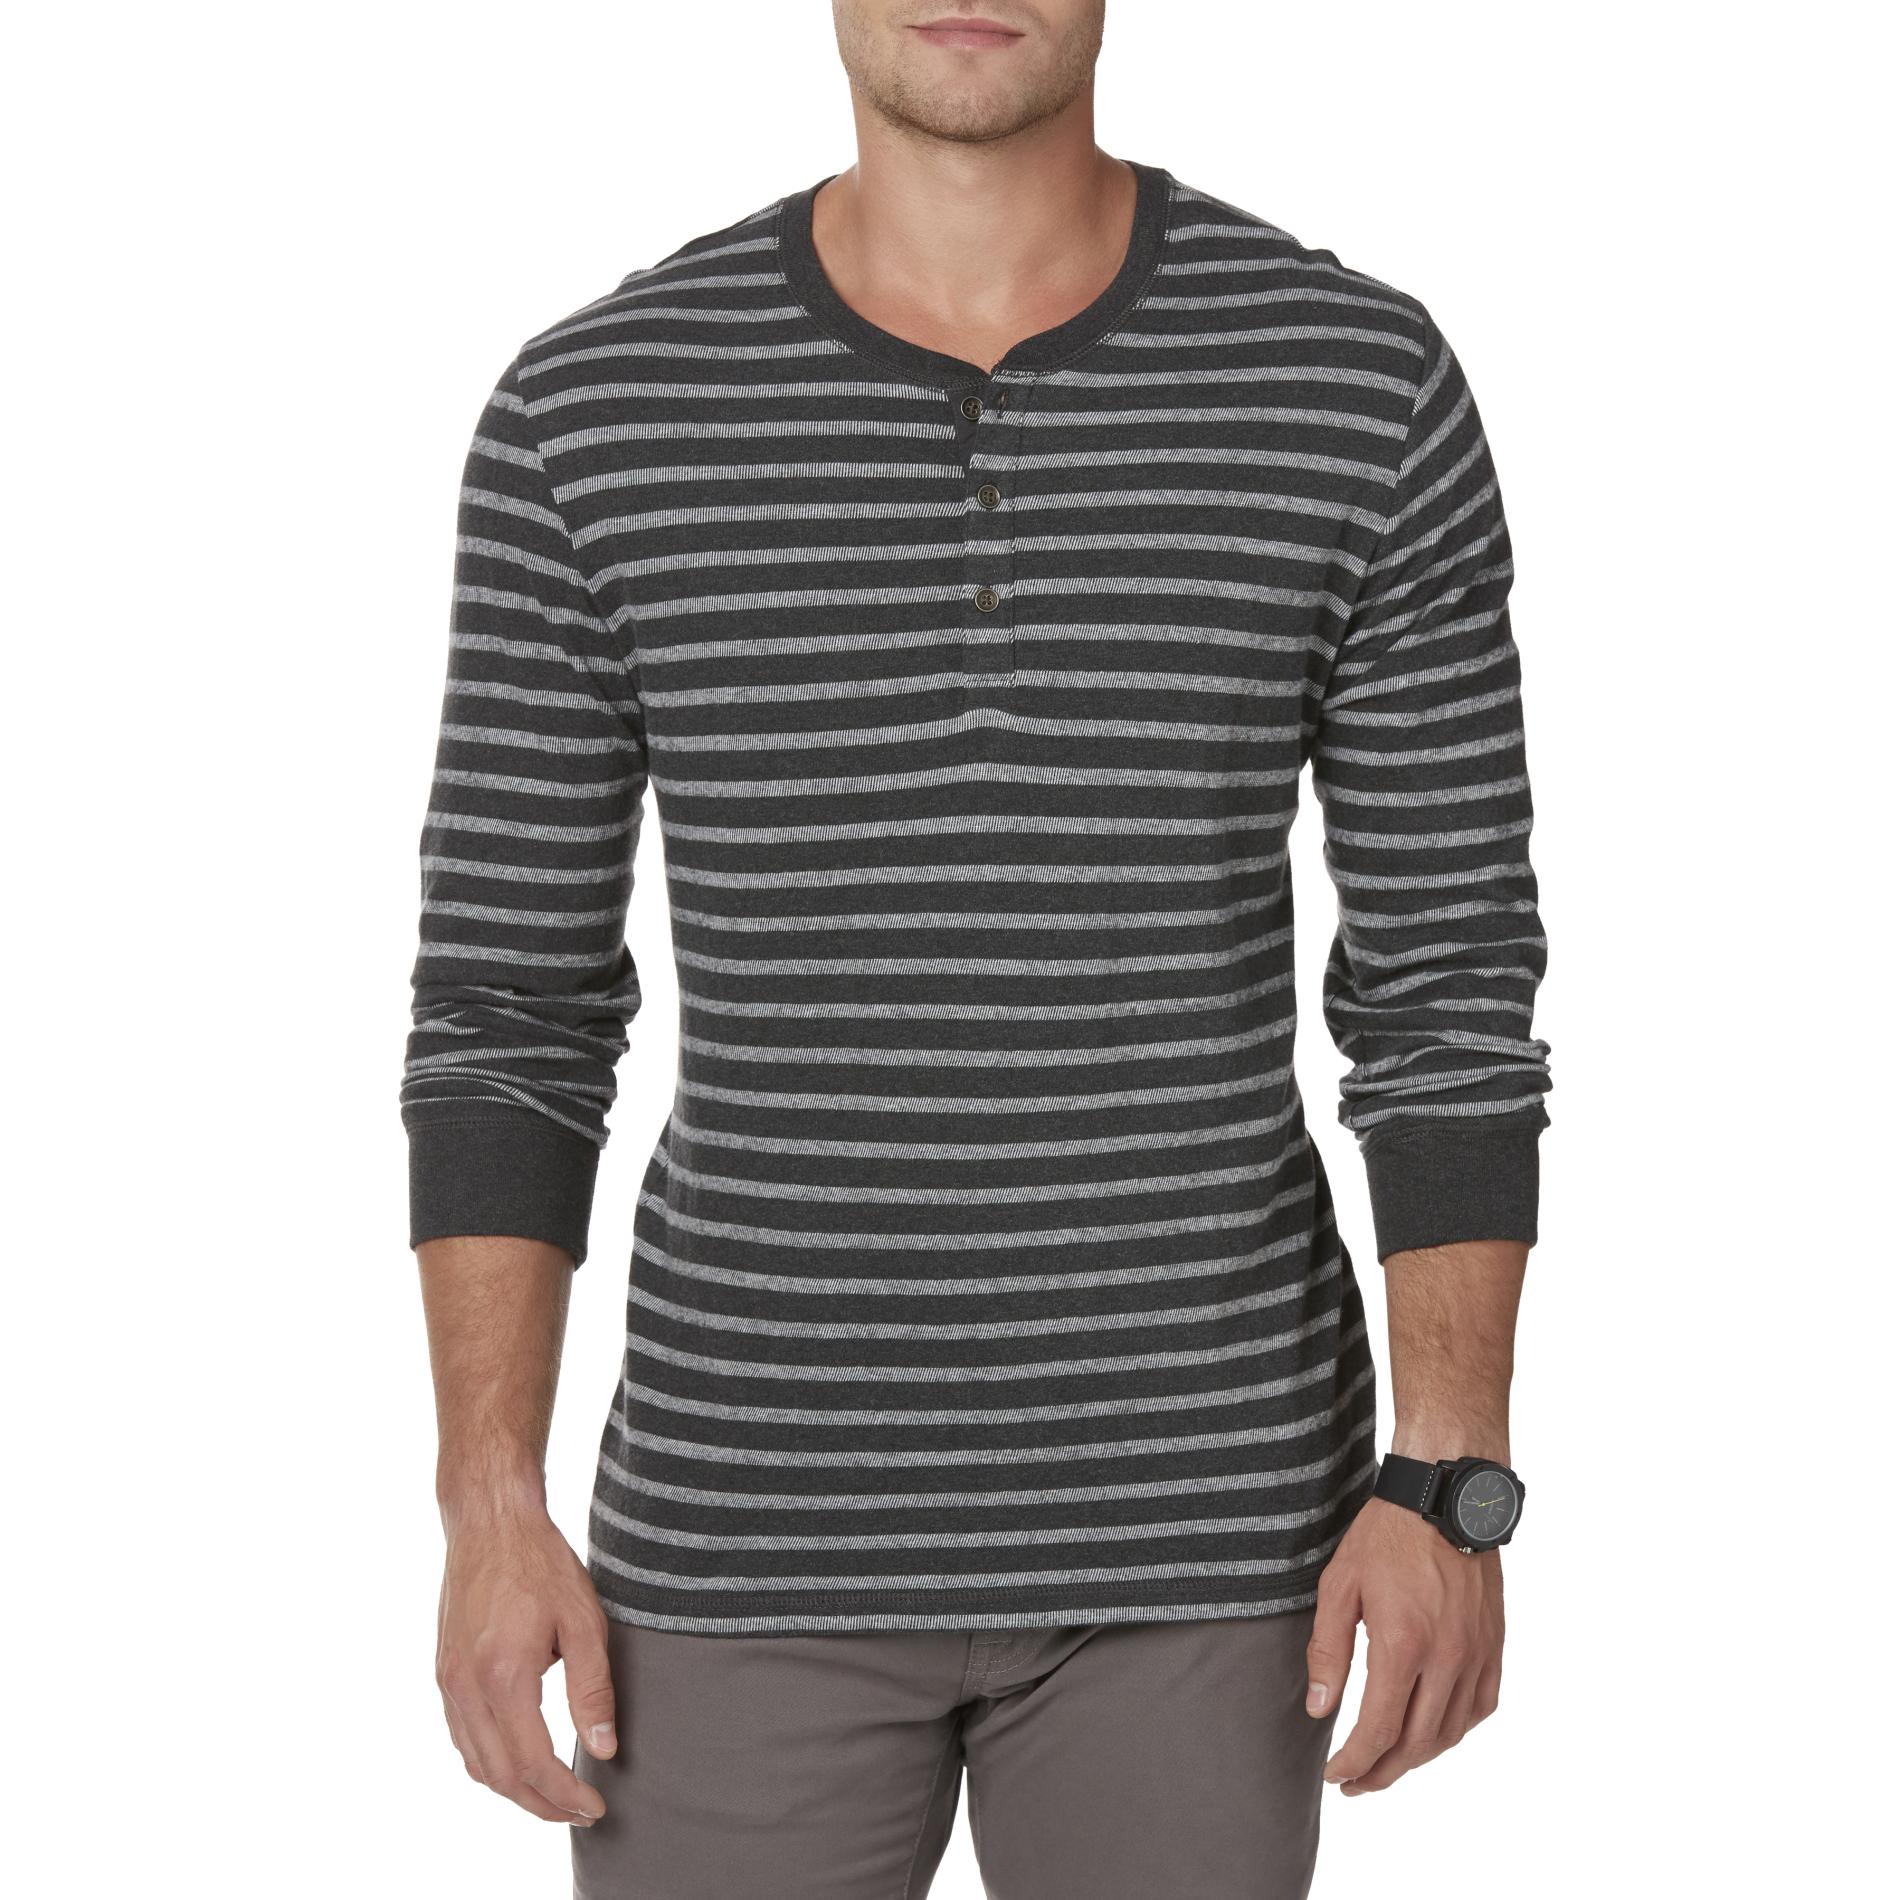 Structure Men's Slim Fit Henley Shirt - Striped